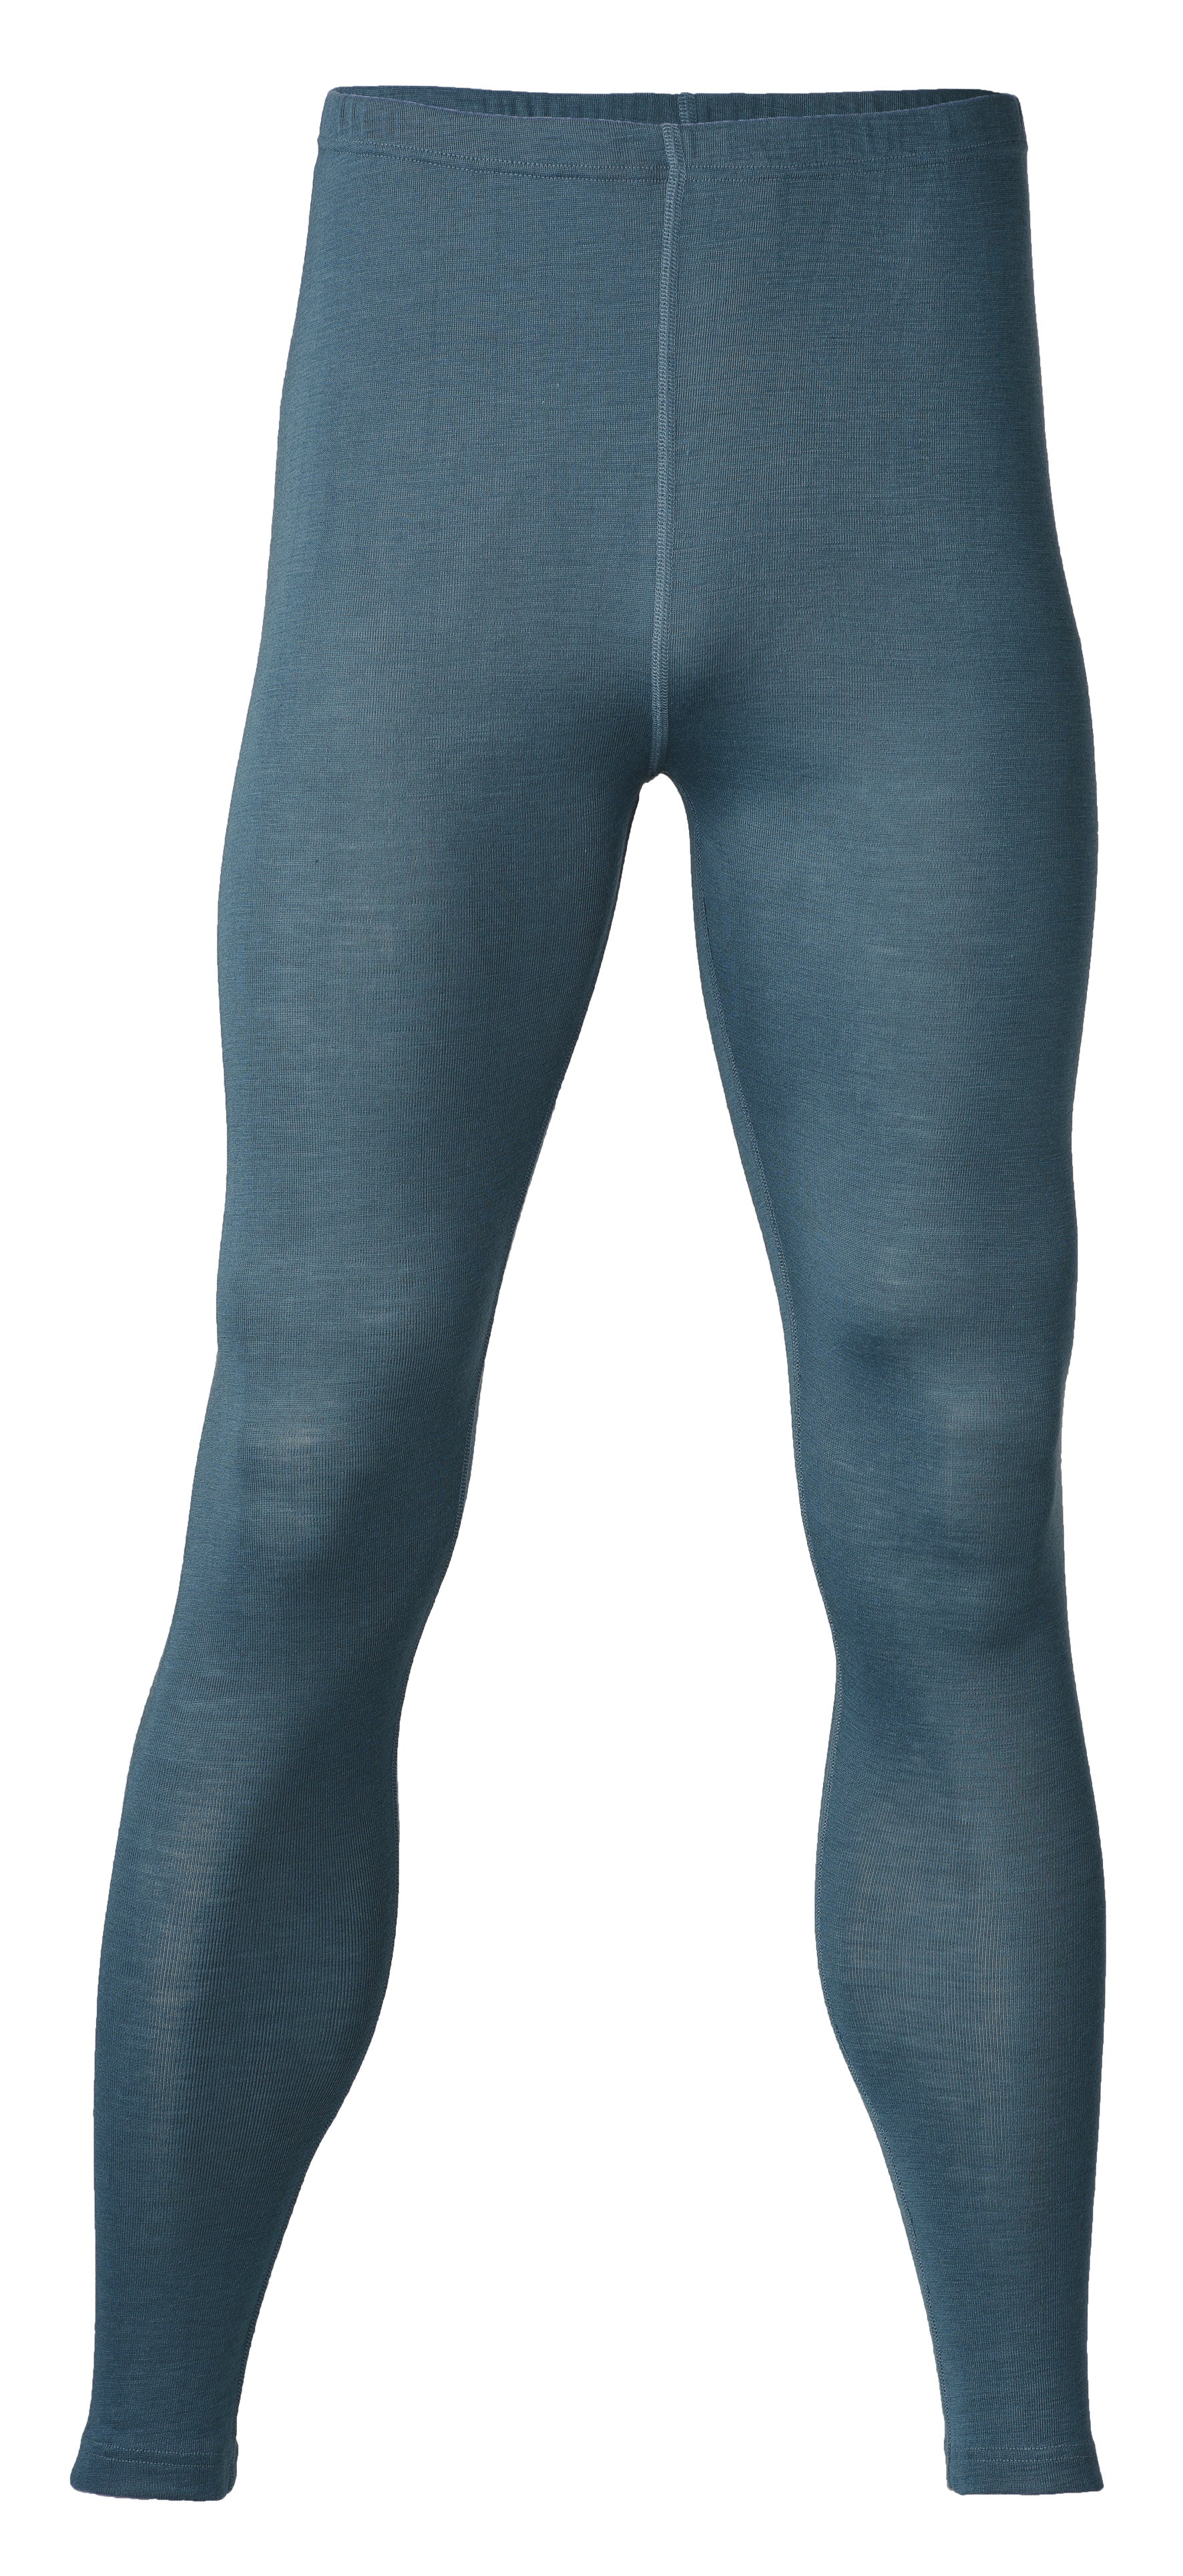 ENGEL - Men's Thermal Underwear Long Johns Leggings, 70